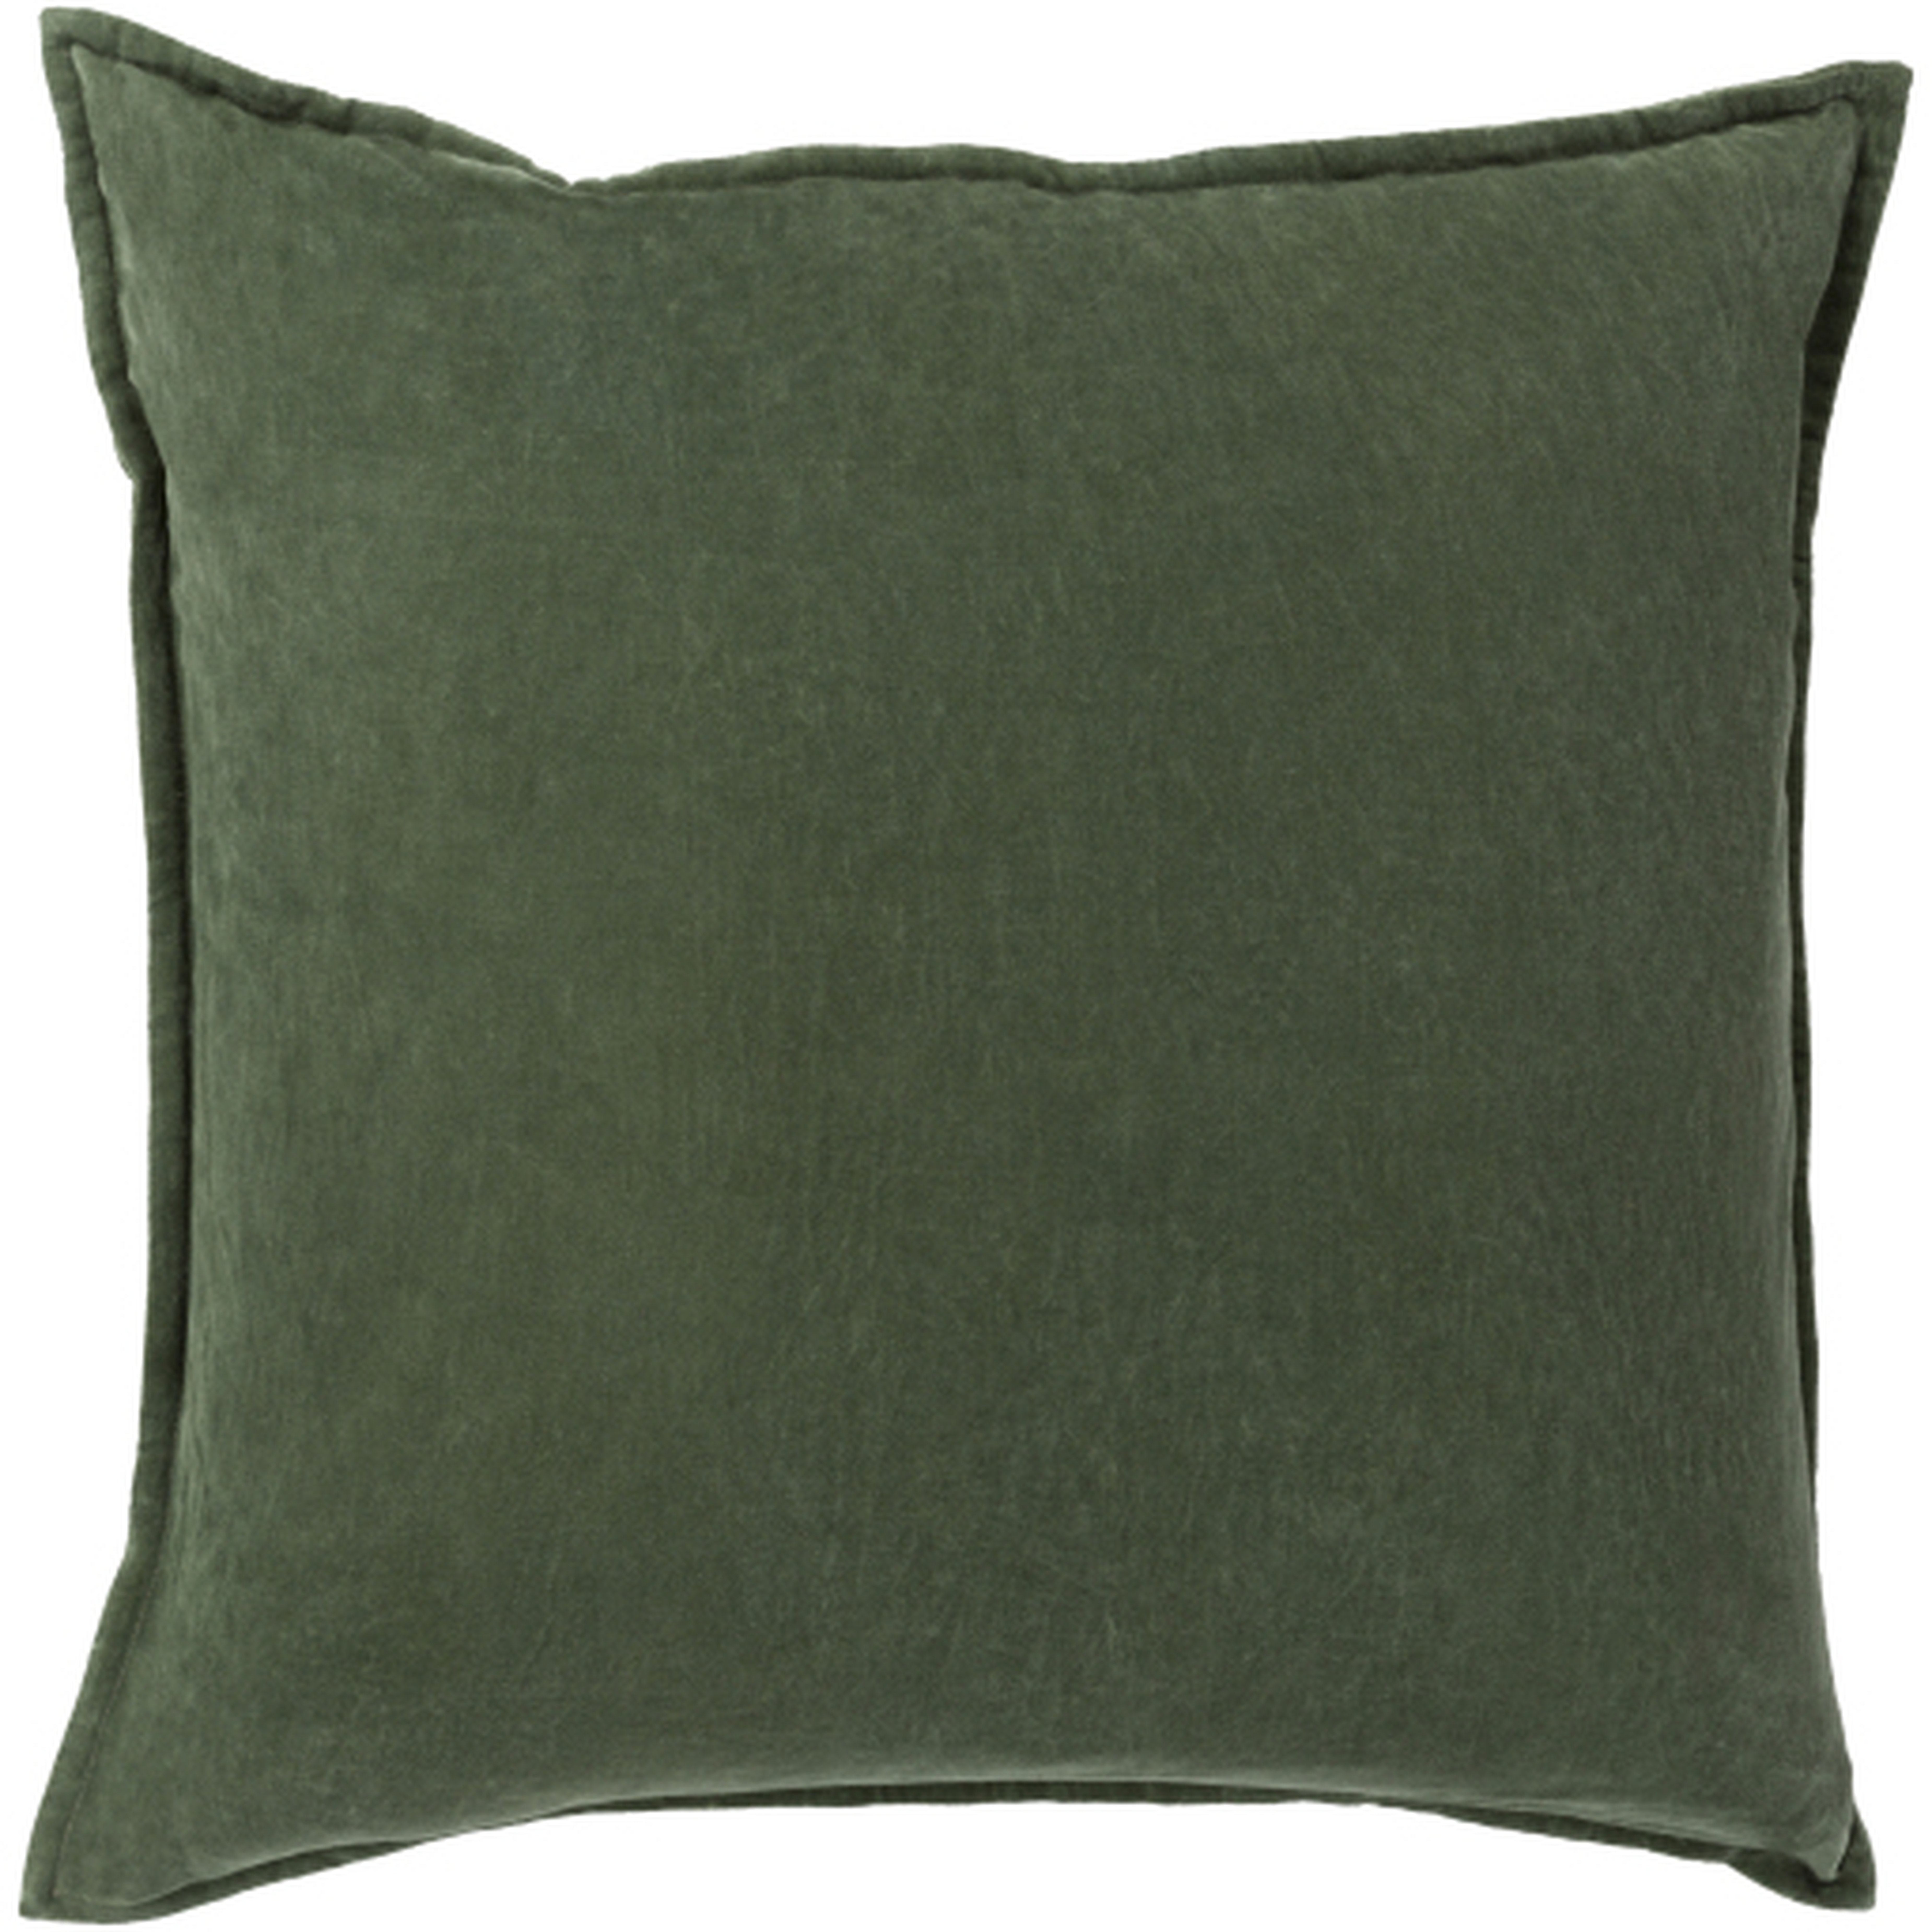 Cotton Velvet Throw Pillow, 20" x 20", with down insert - Surya